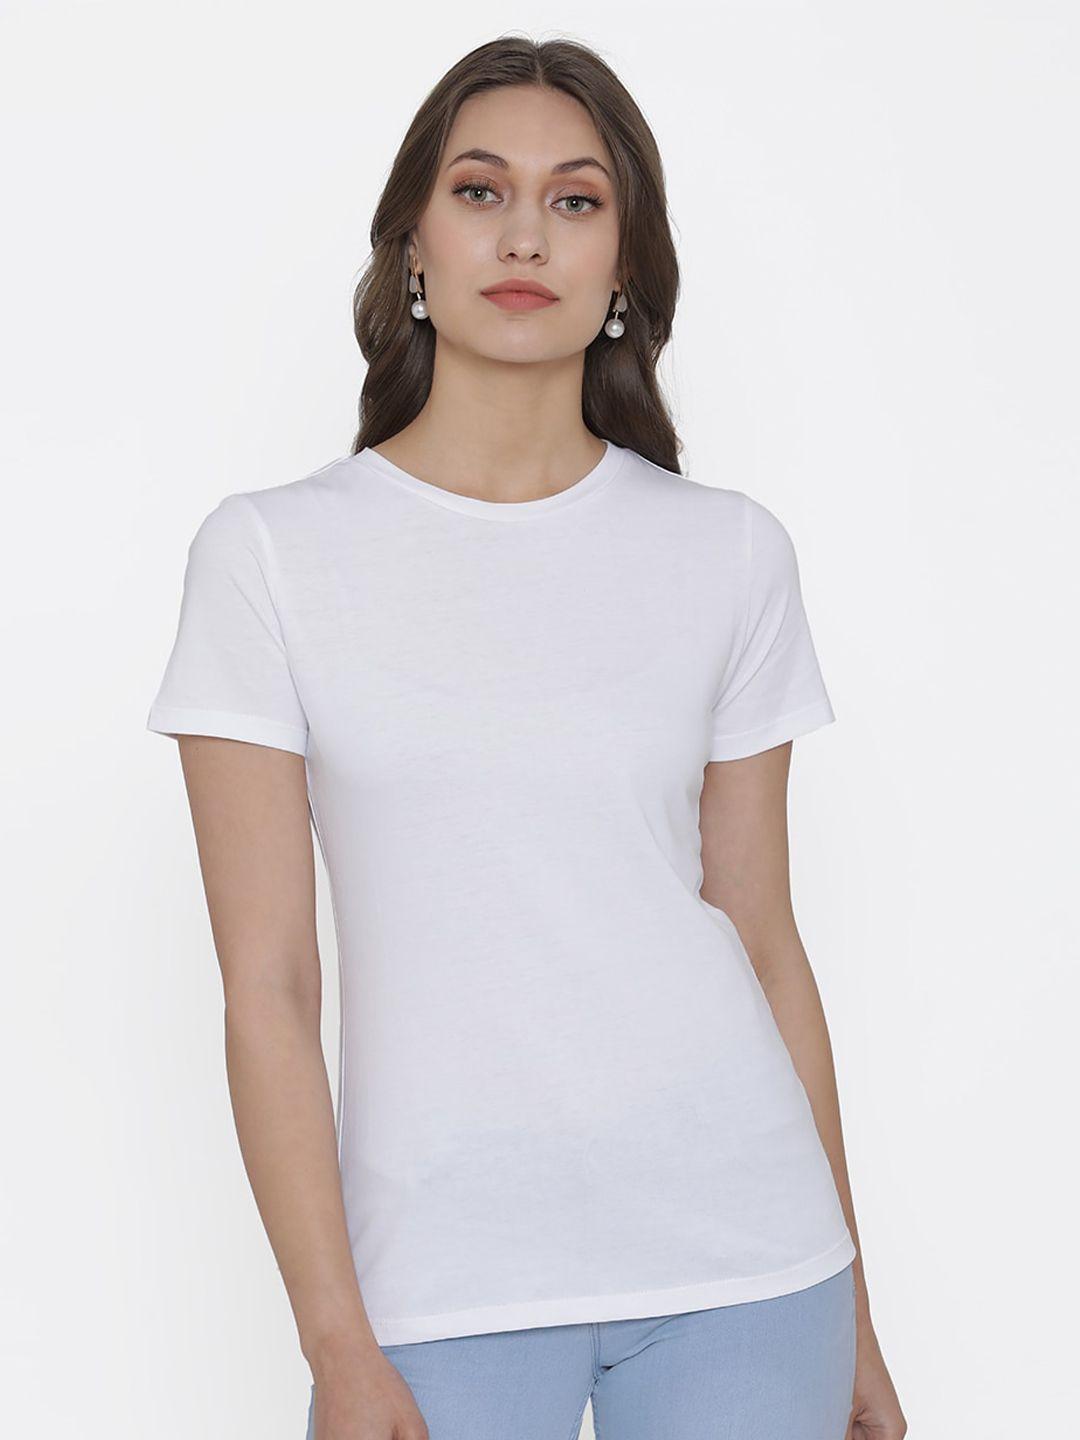 door74 women white cotton t-shirt